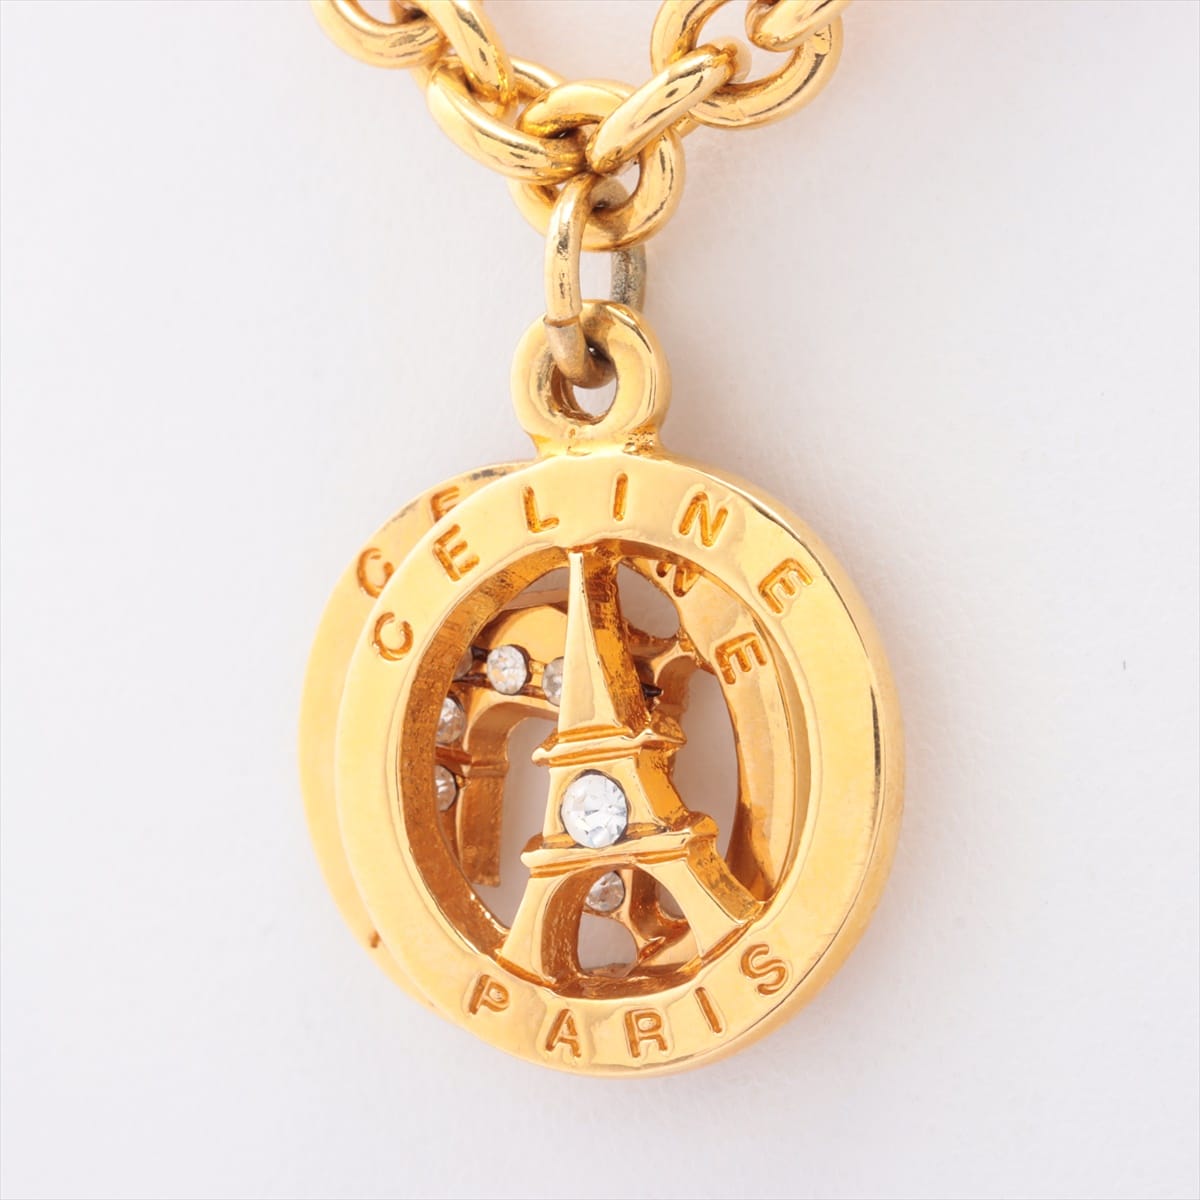 CELINE Necklace GP×inestone Gold